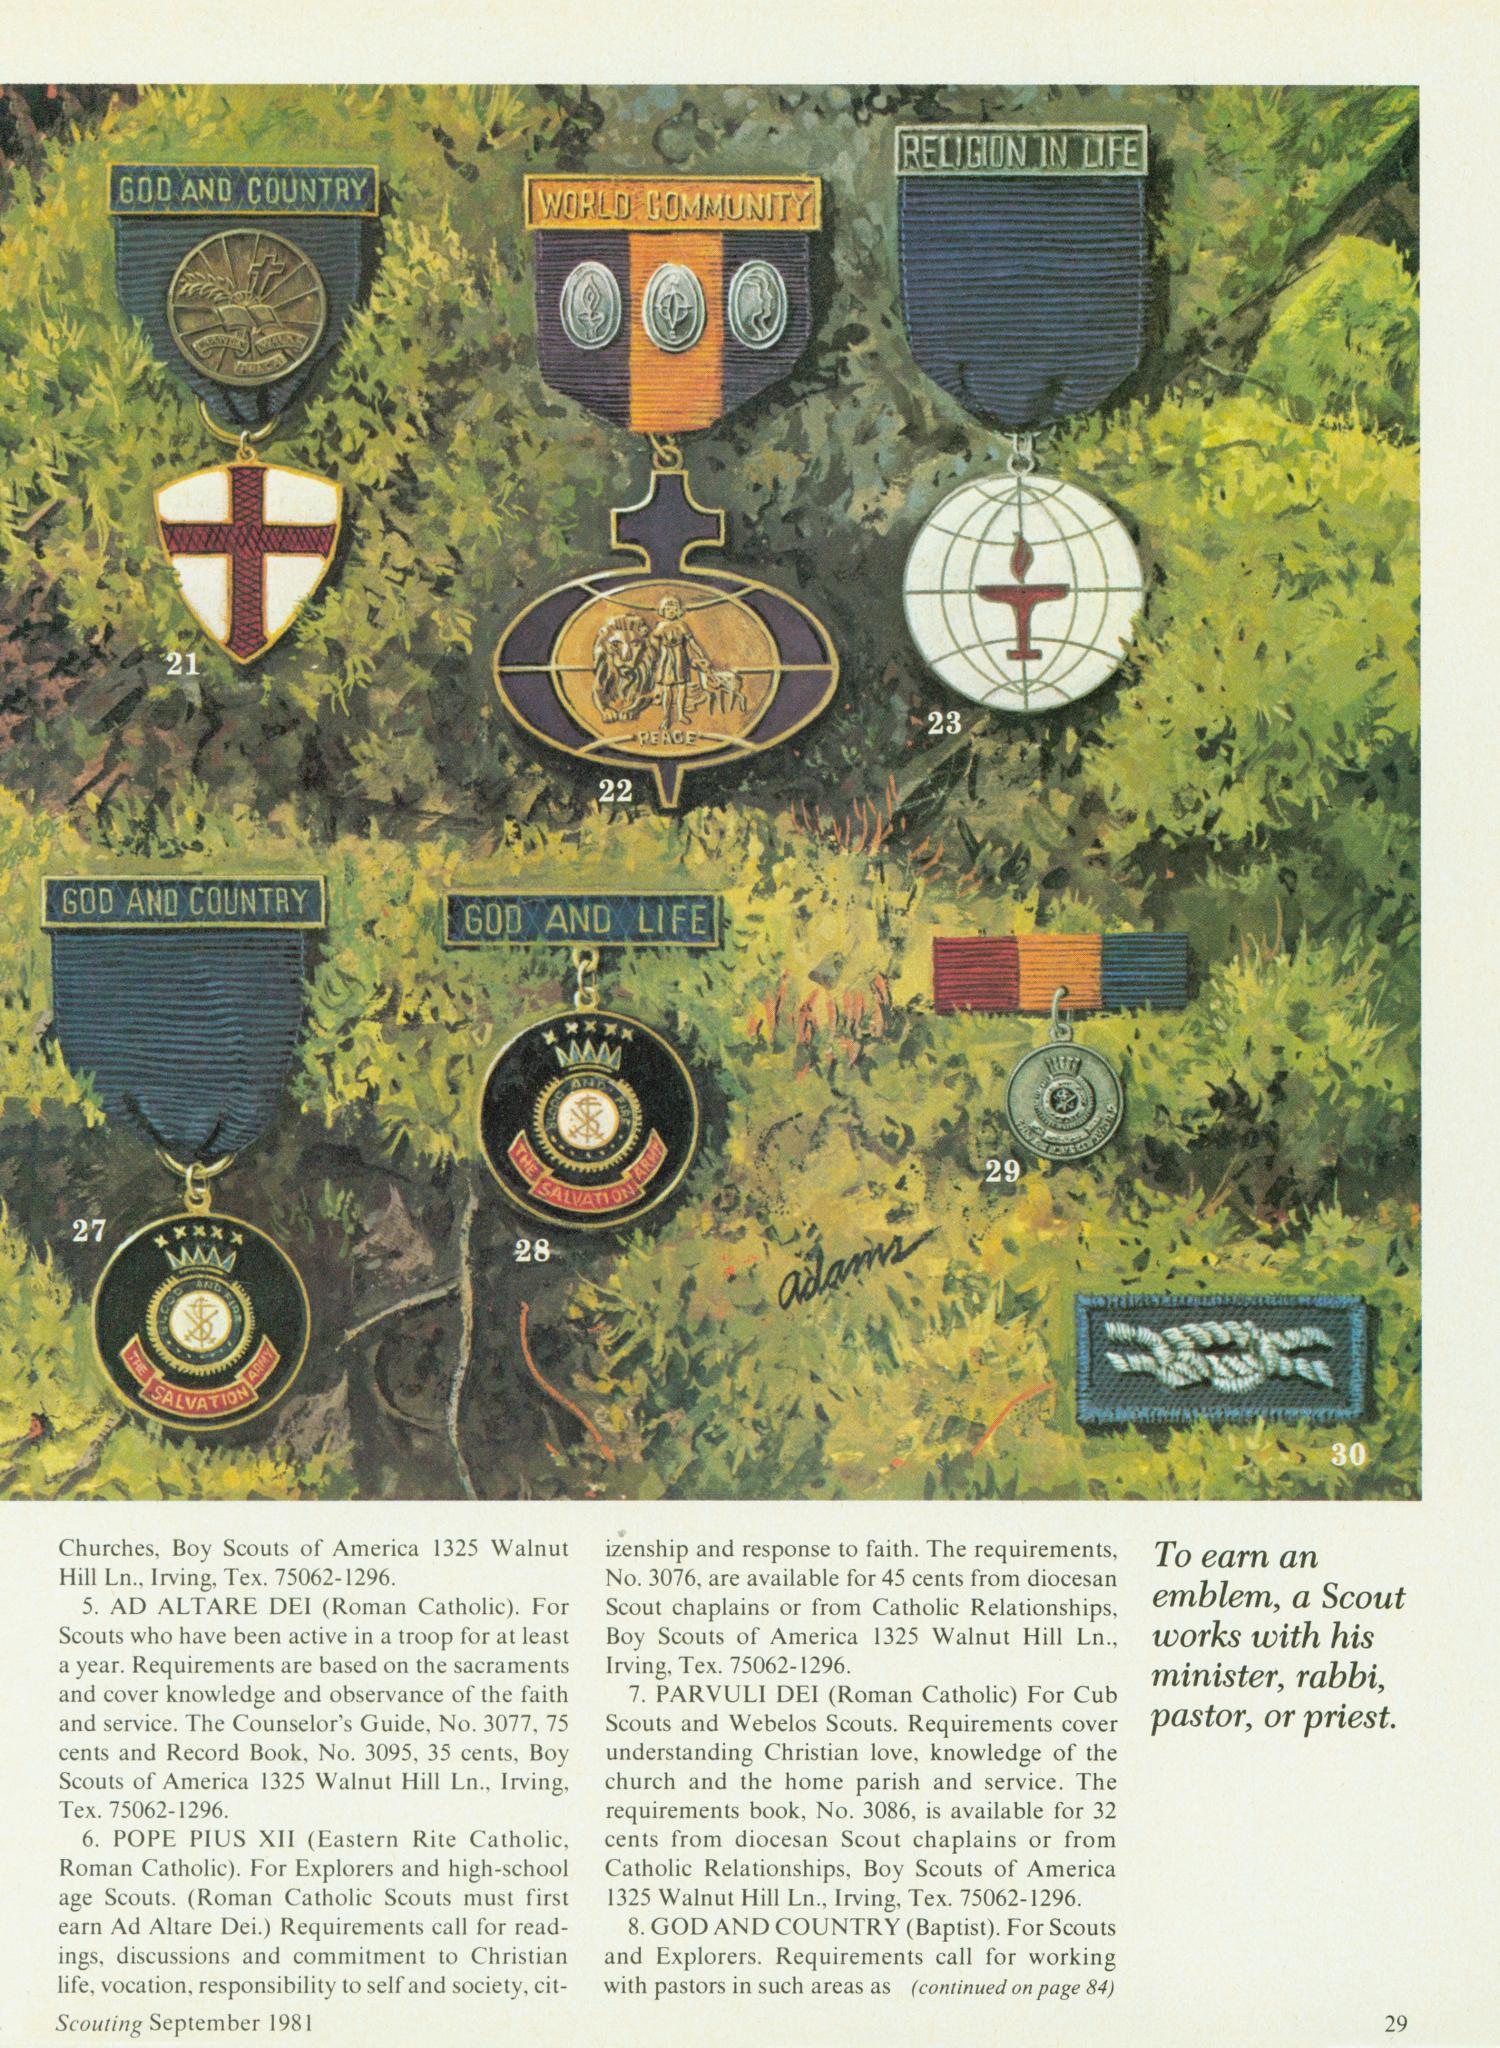 Scouting, Volume 69, Number 4, September 1981
                                                
                                                    29
                                                